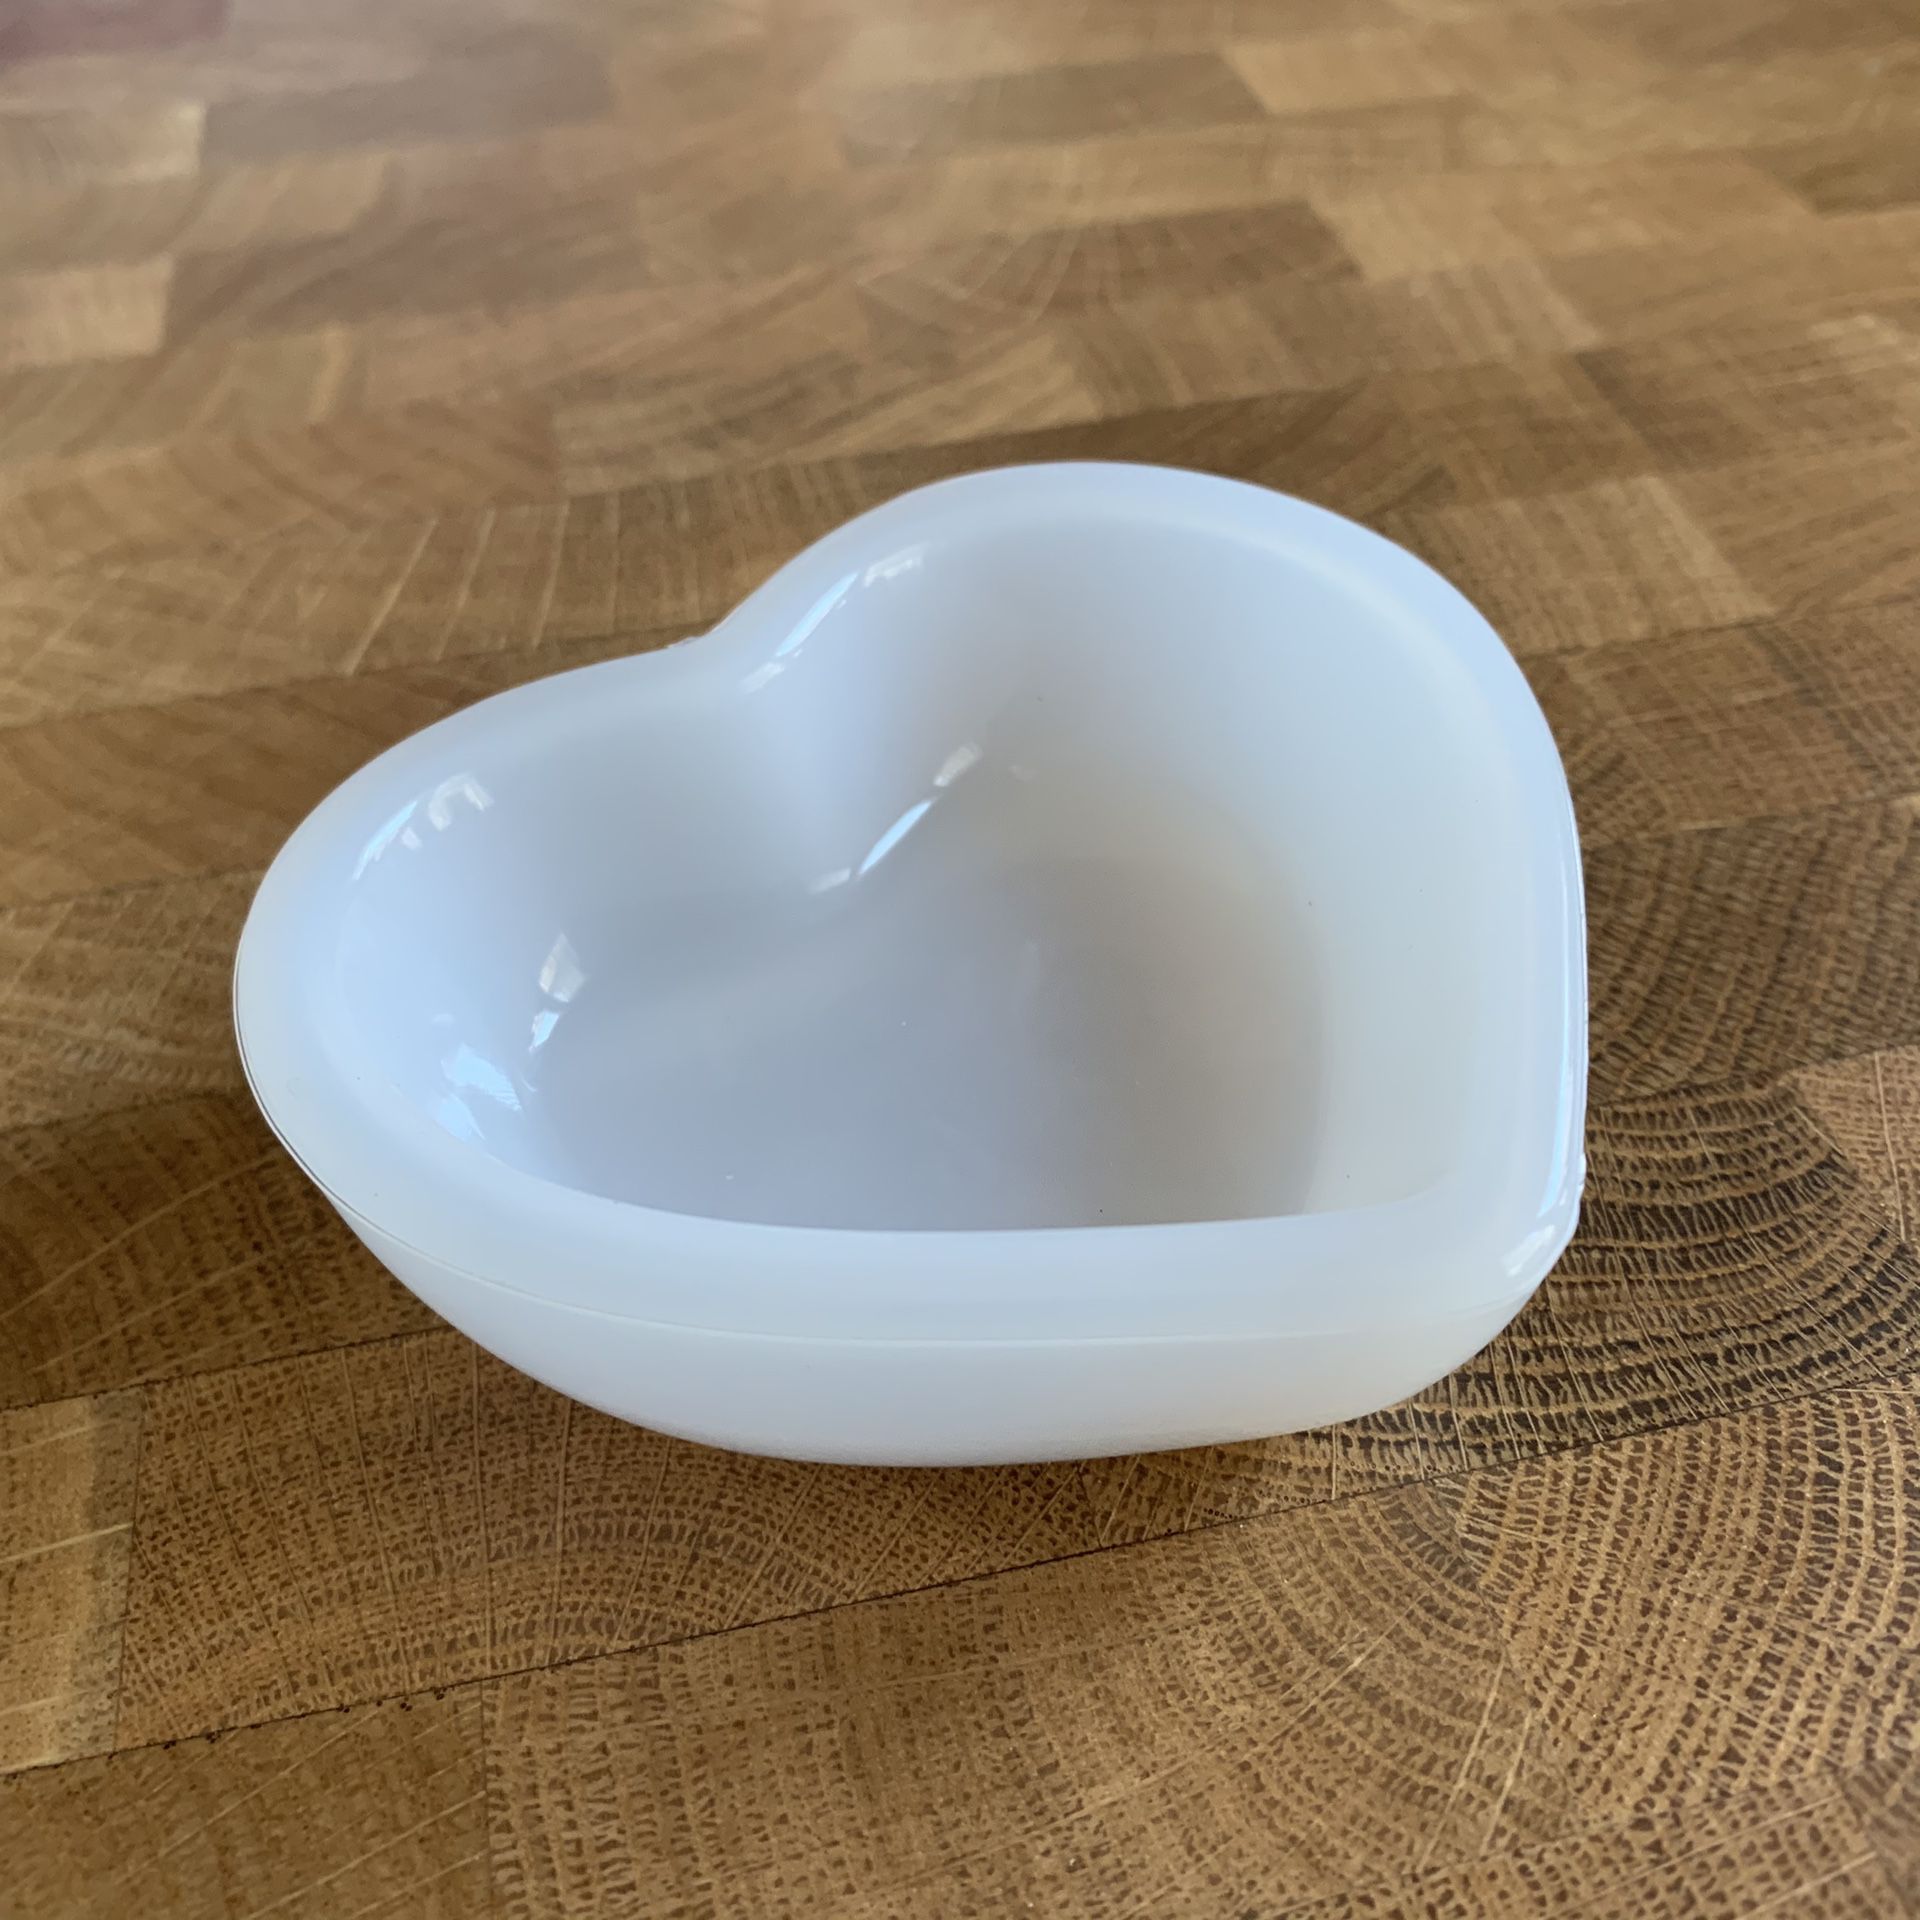 Heart Trinket/Jewelry Dish Silicone Mold